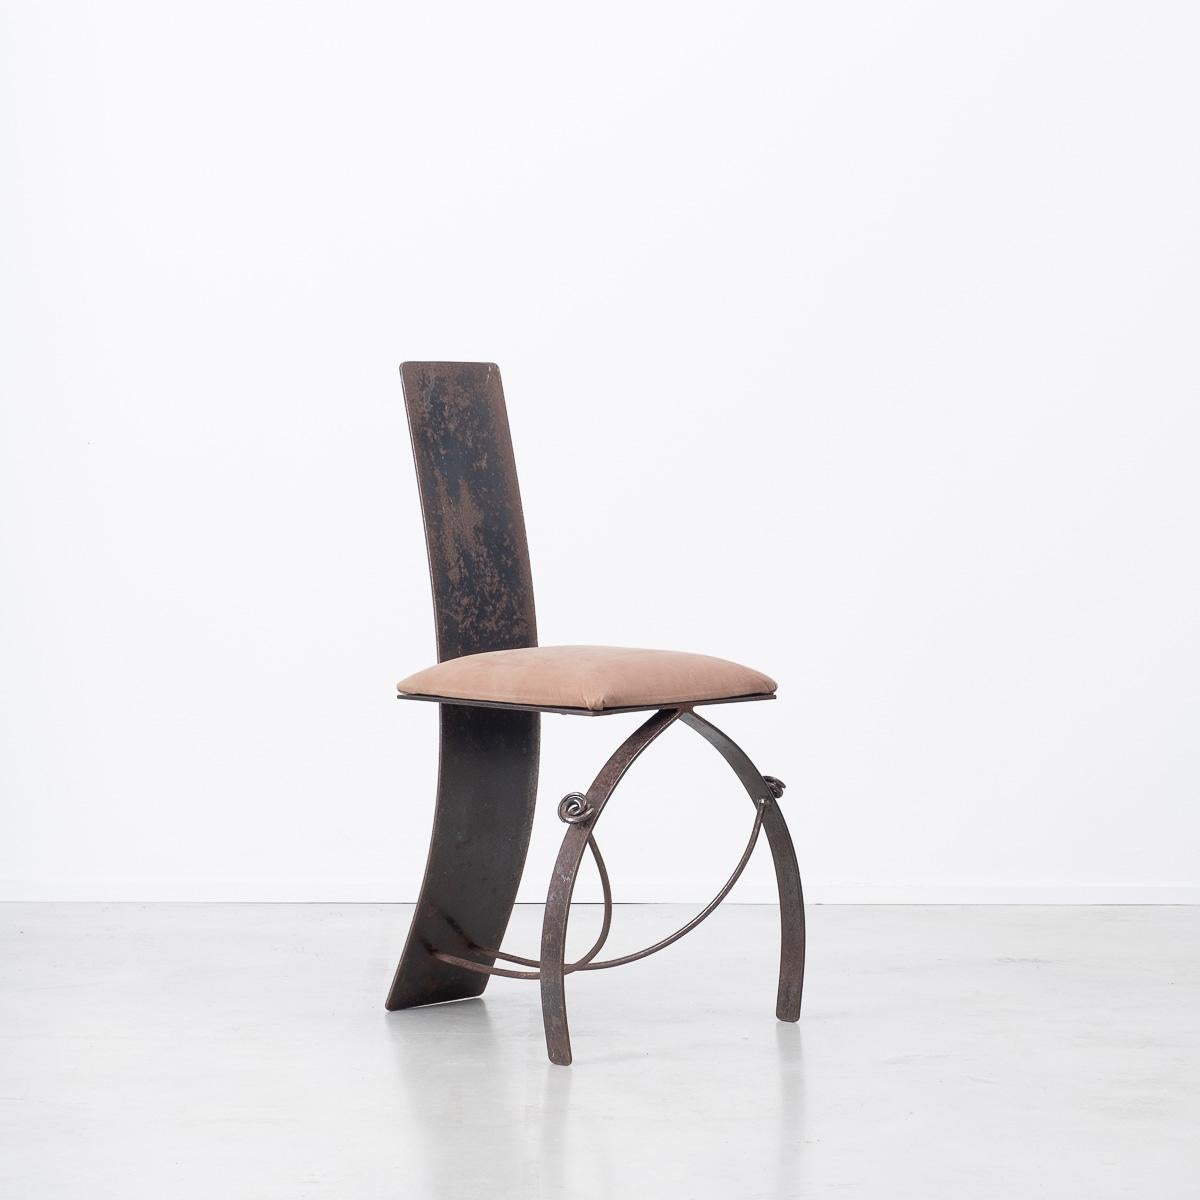 British Blacksmith Crafted Steel Side Chair